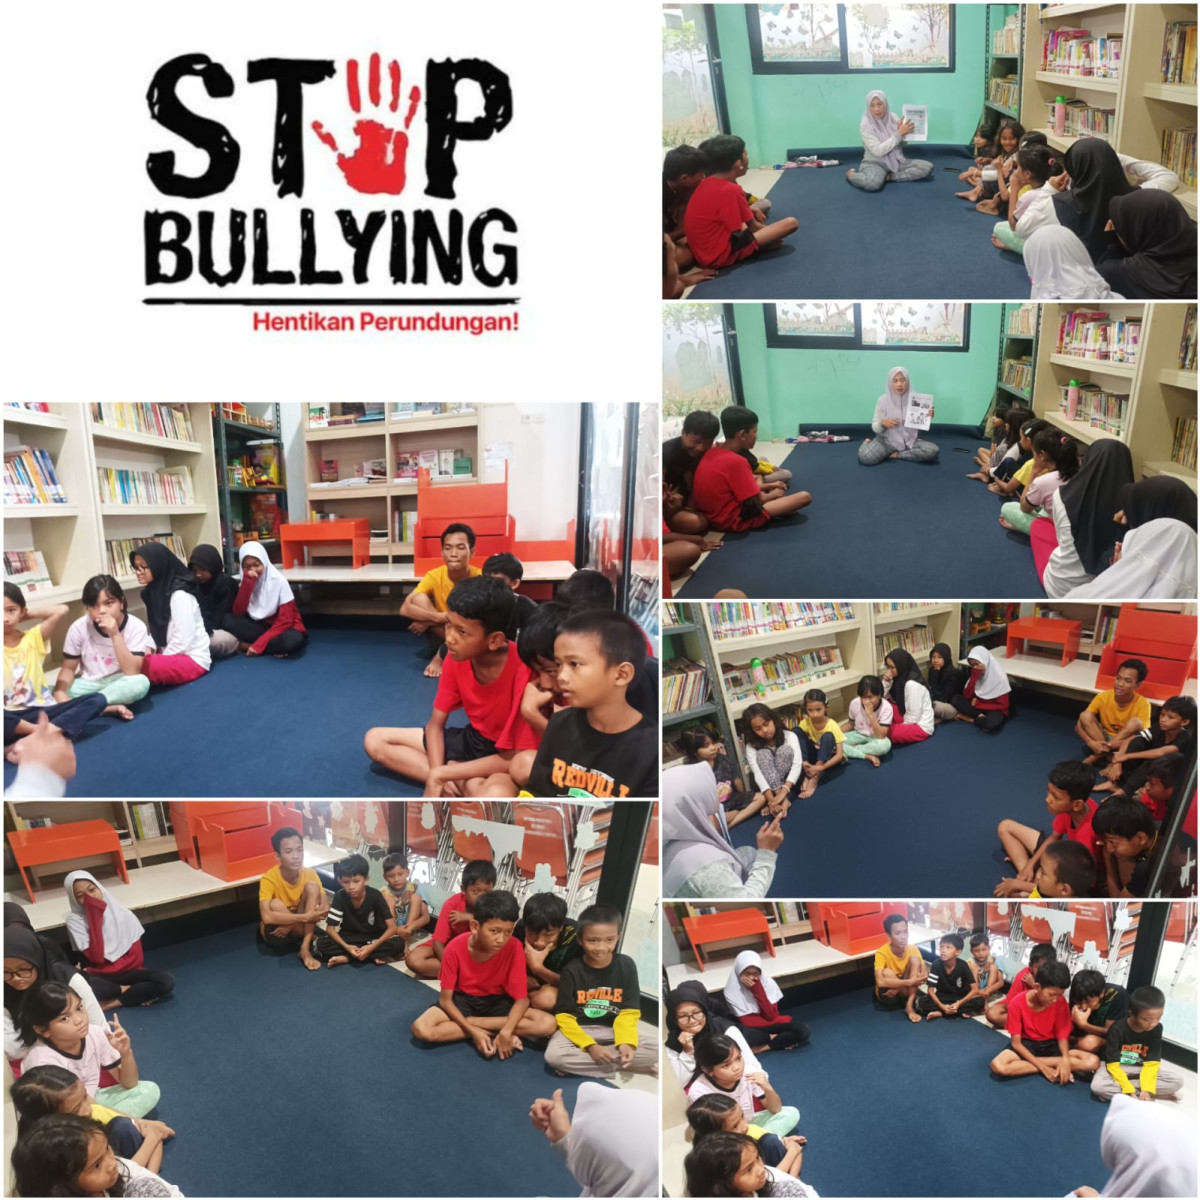 Edukasi Pengelola RPTRA *Bullying/perundungan* kepada pengunjung anak anak.